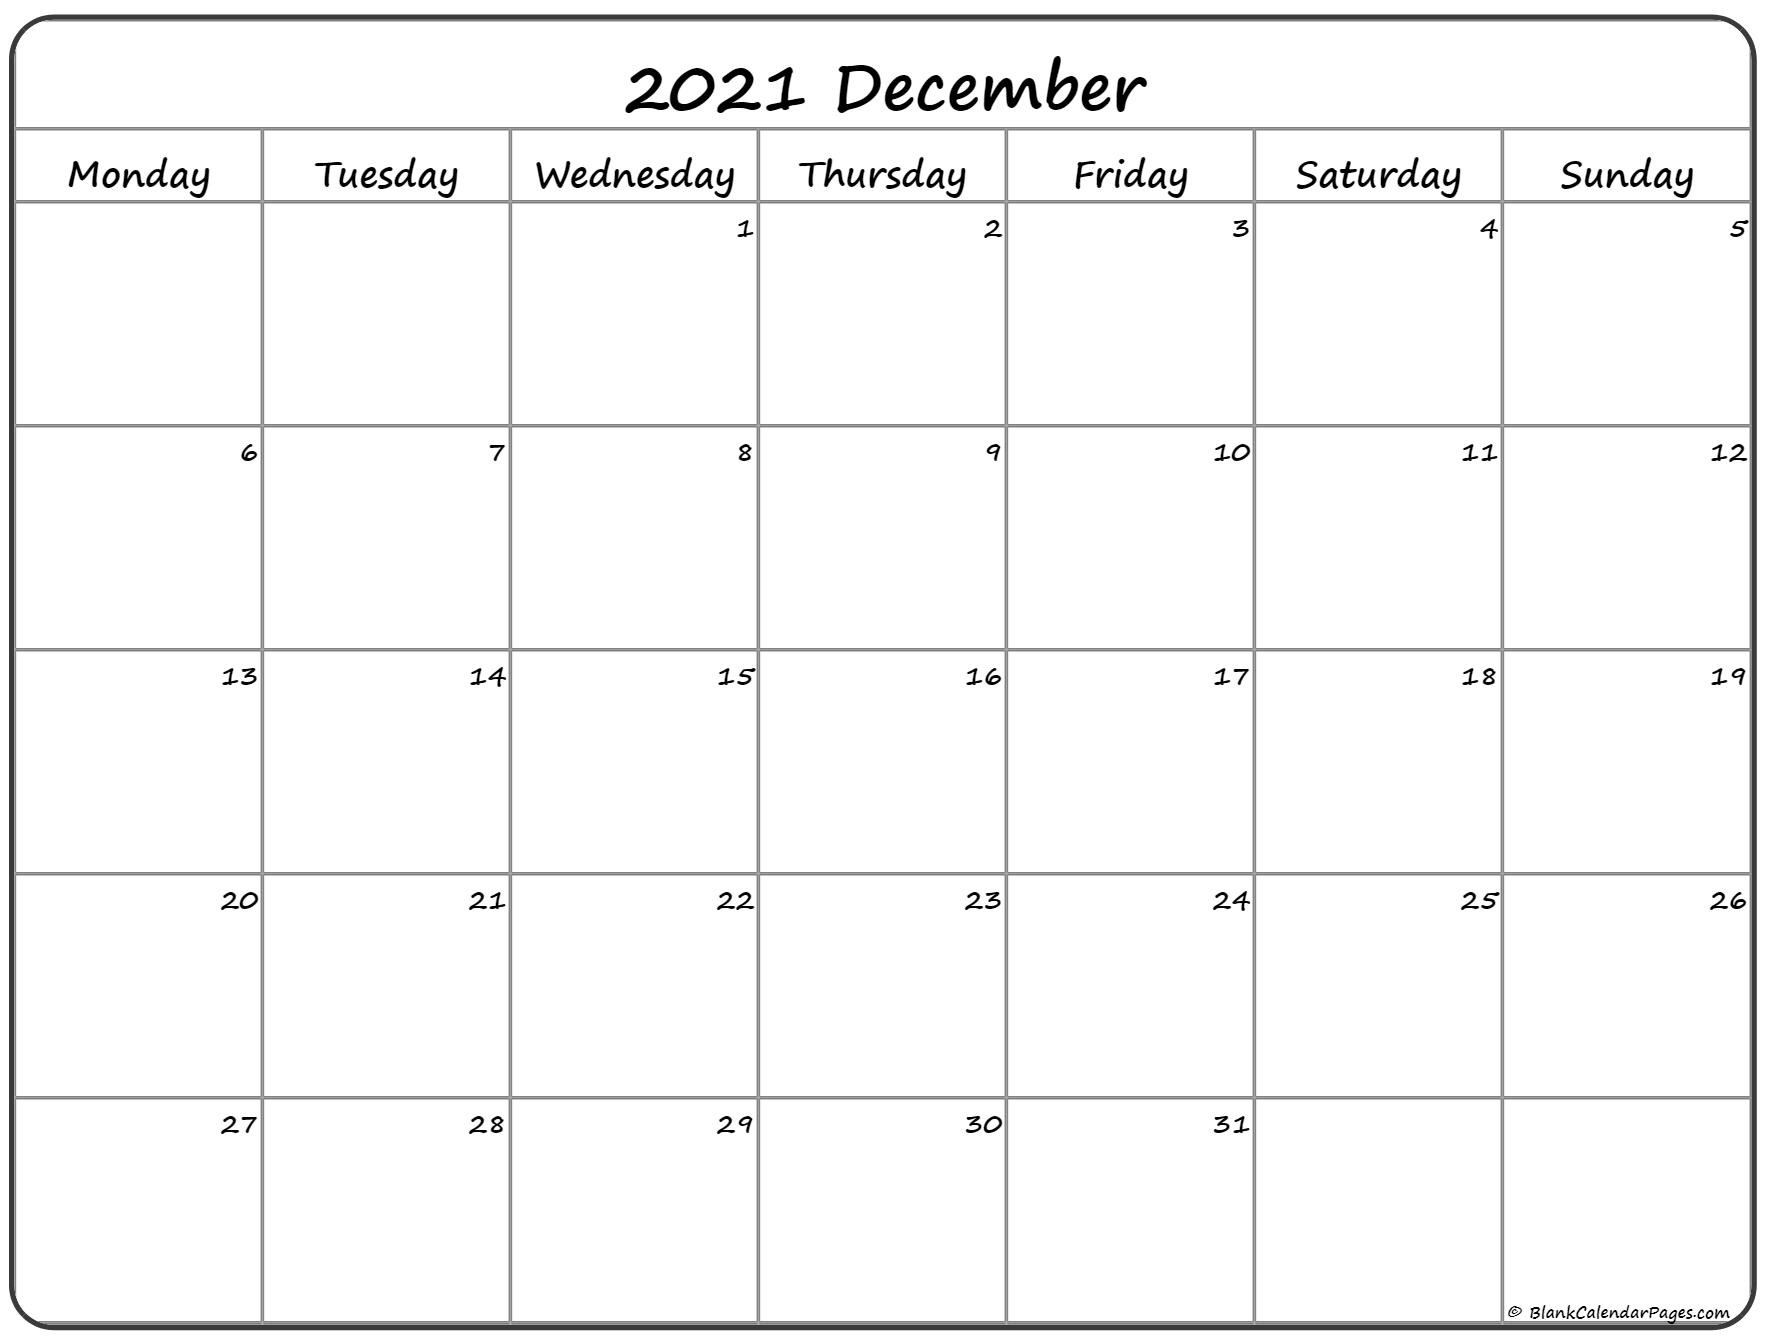 December 2021 Monday Calendar | Monday To Sunday-Monday Through Friday Calendar July 2021